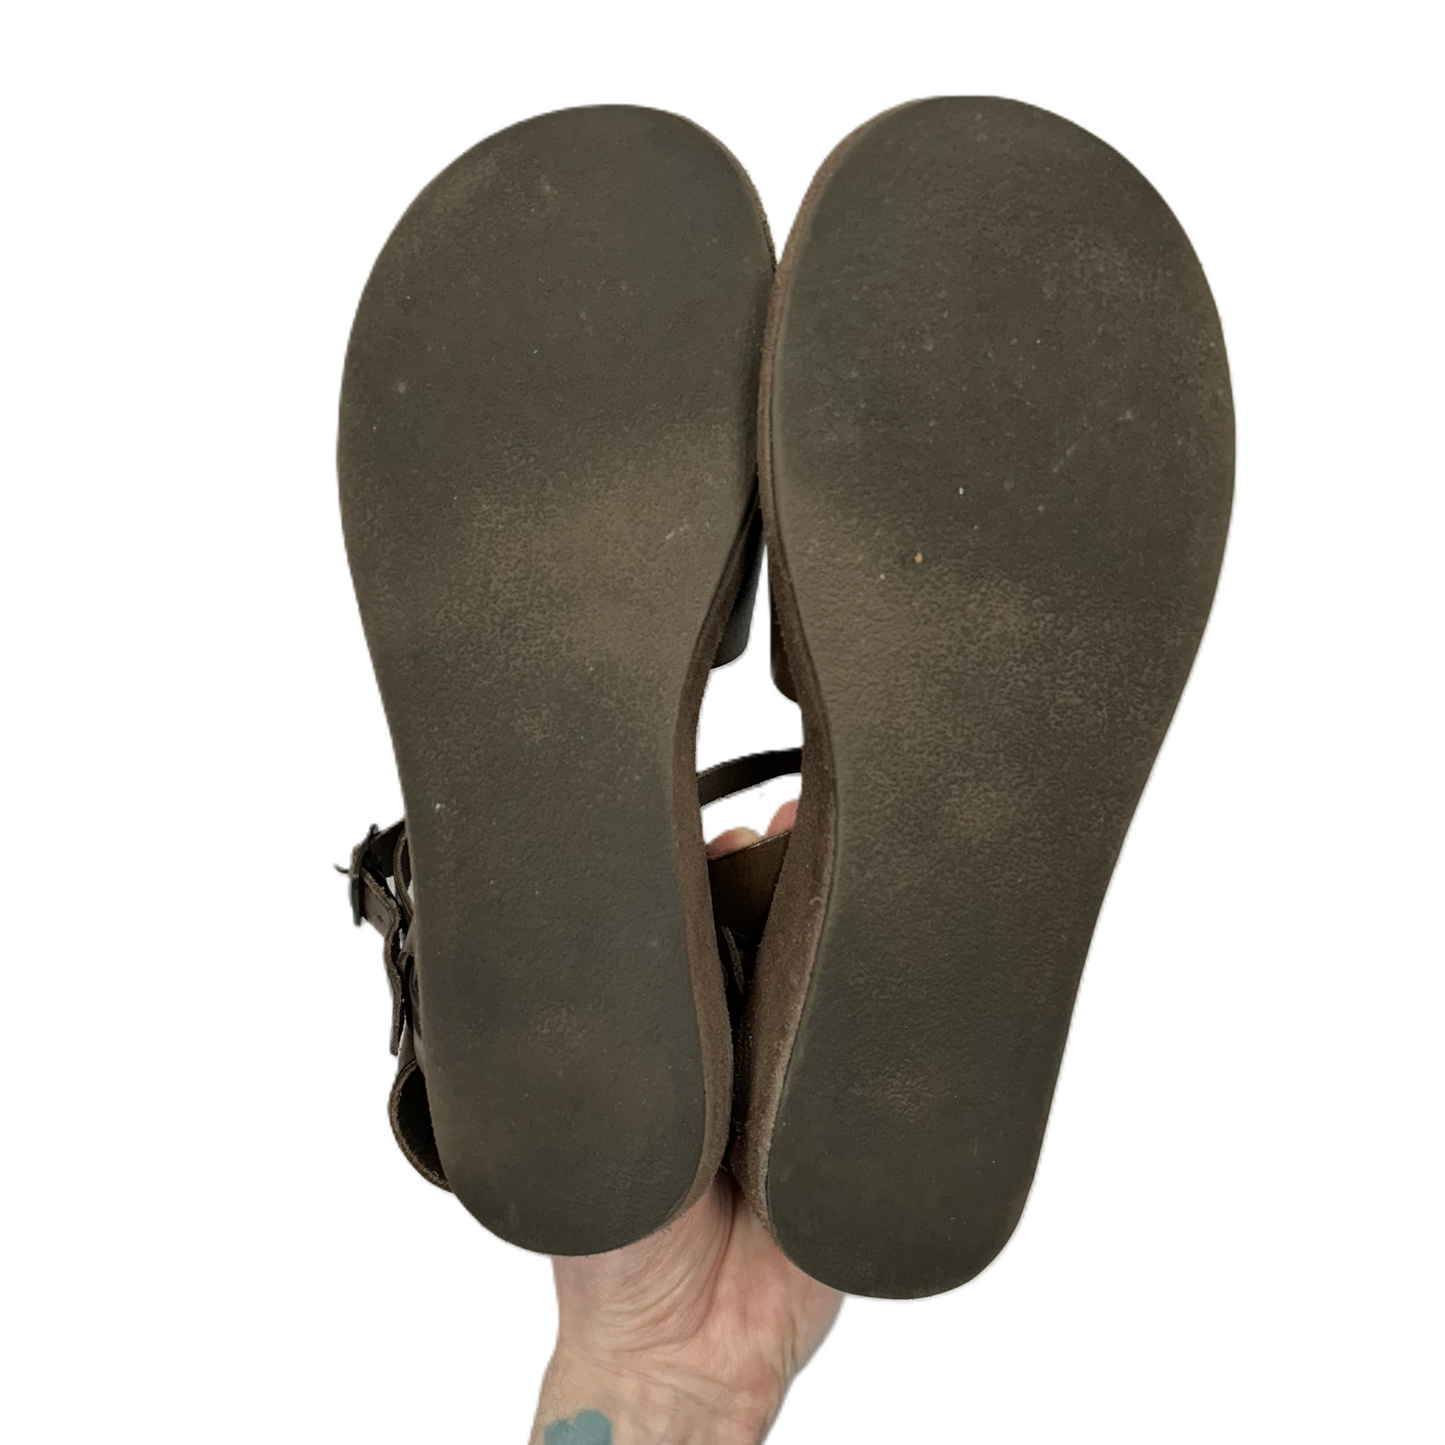 Sandals Heels Wedge By Kork Ease  Size: 7